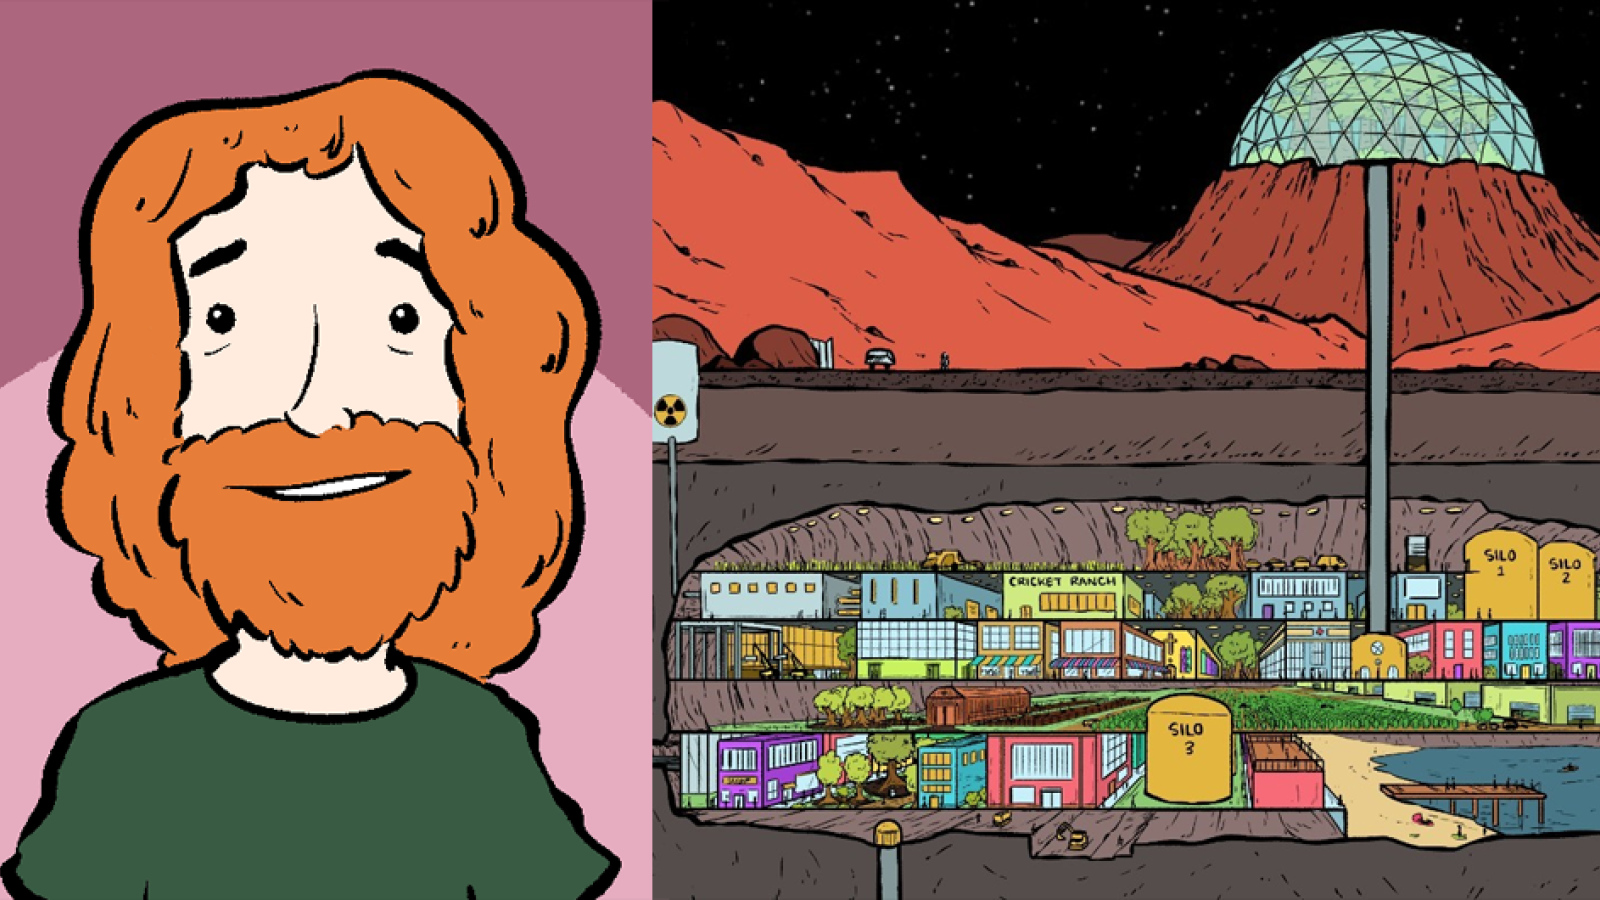 Zach Weinersmith, and a vision of an underground Martian city